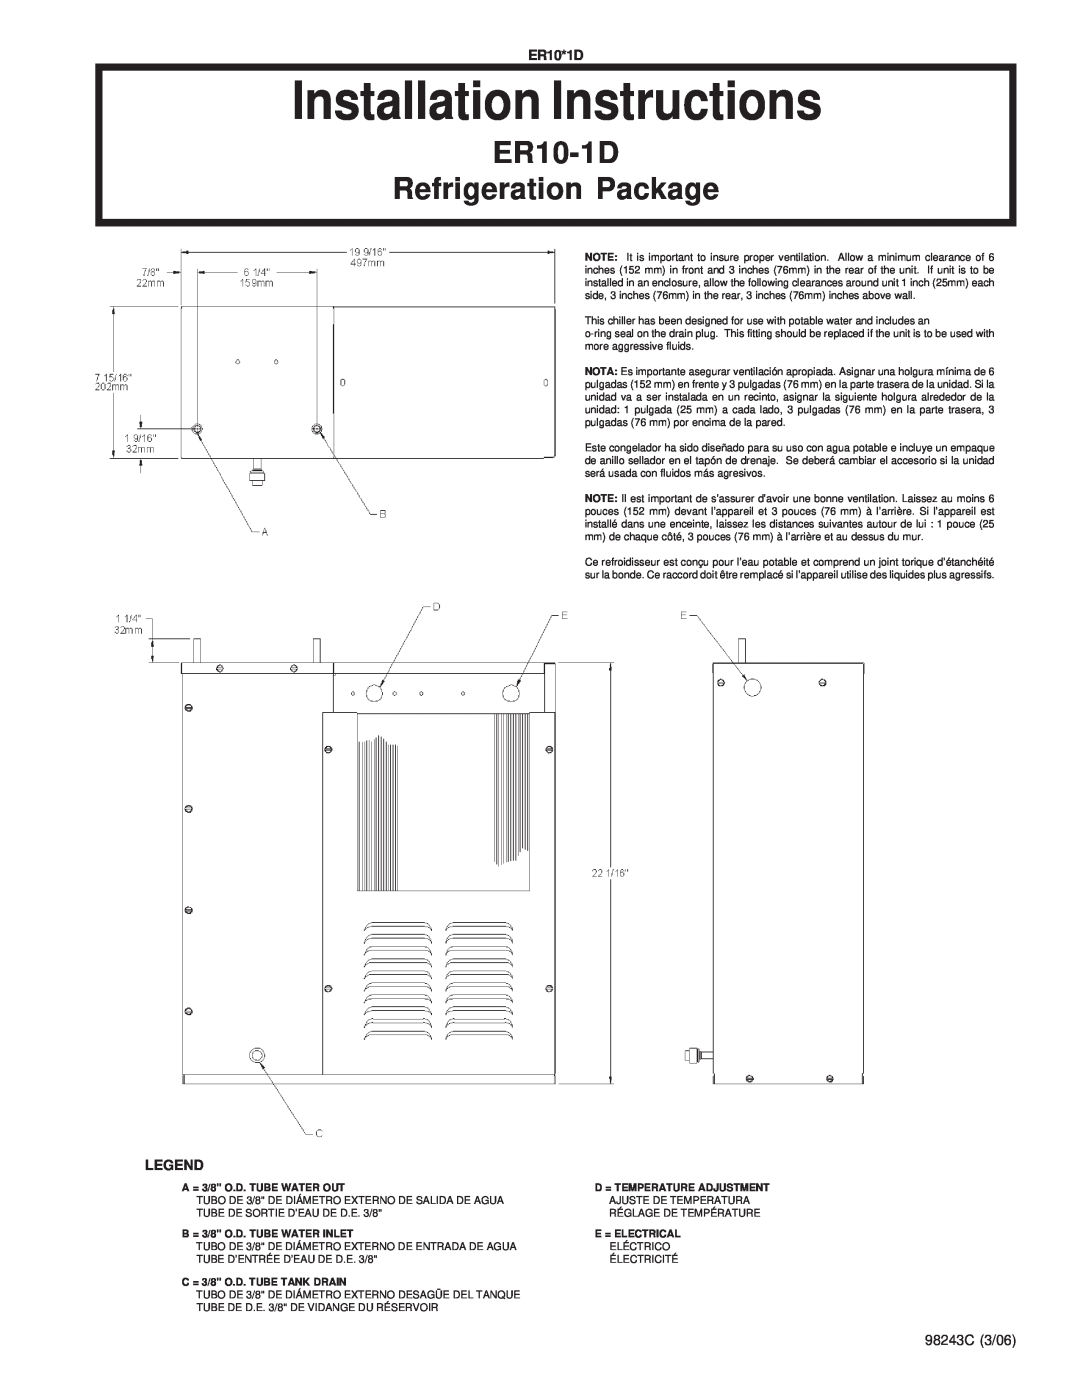 Elkay ER10*1D installation instructions 98243C 3/06, Installation Instructions, ER10-1D Refrigeration Package 